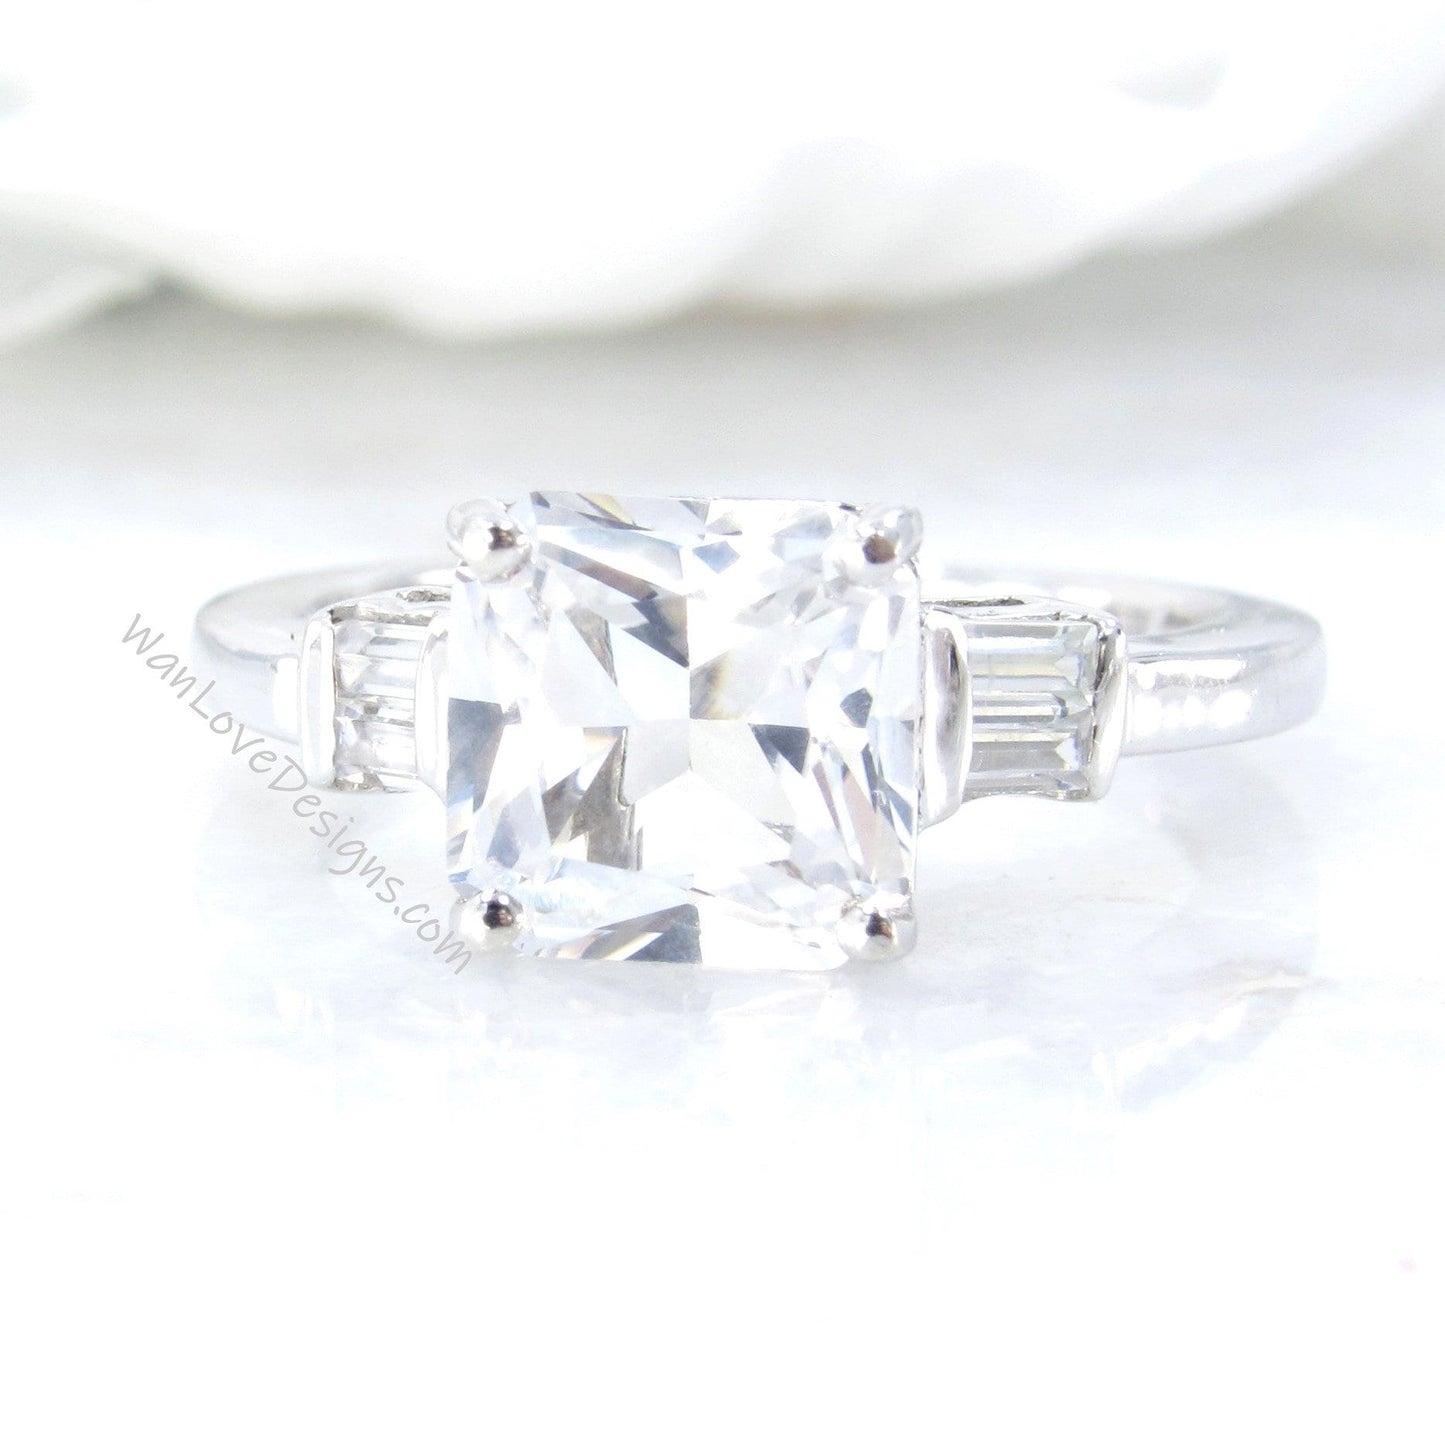 White Sapphire Radiant Princess & Baguette Engagement Ring 5 Gemstone Custom Wedding Anniversary Gift, WanLoveDesigns